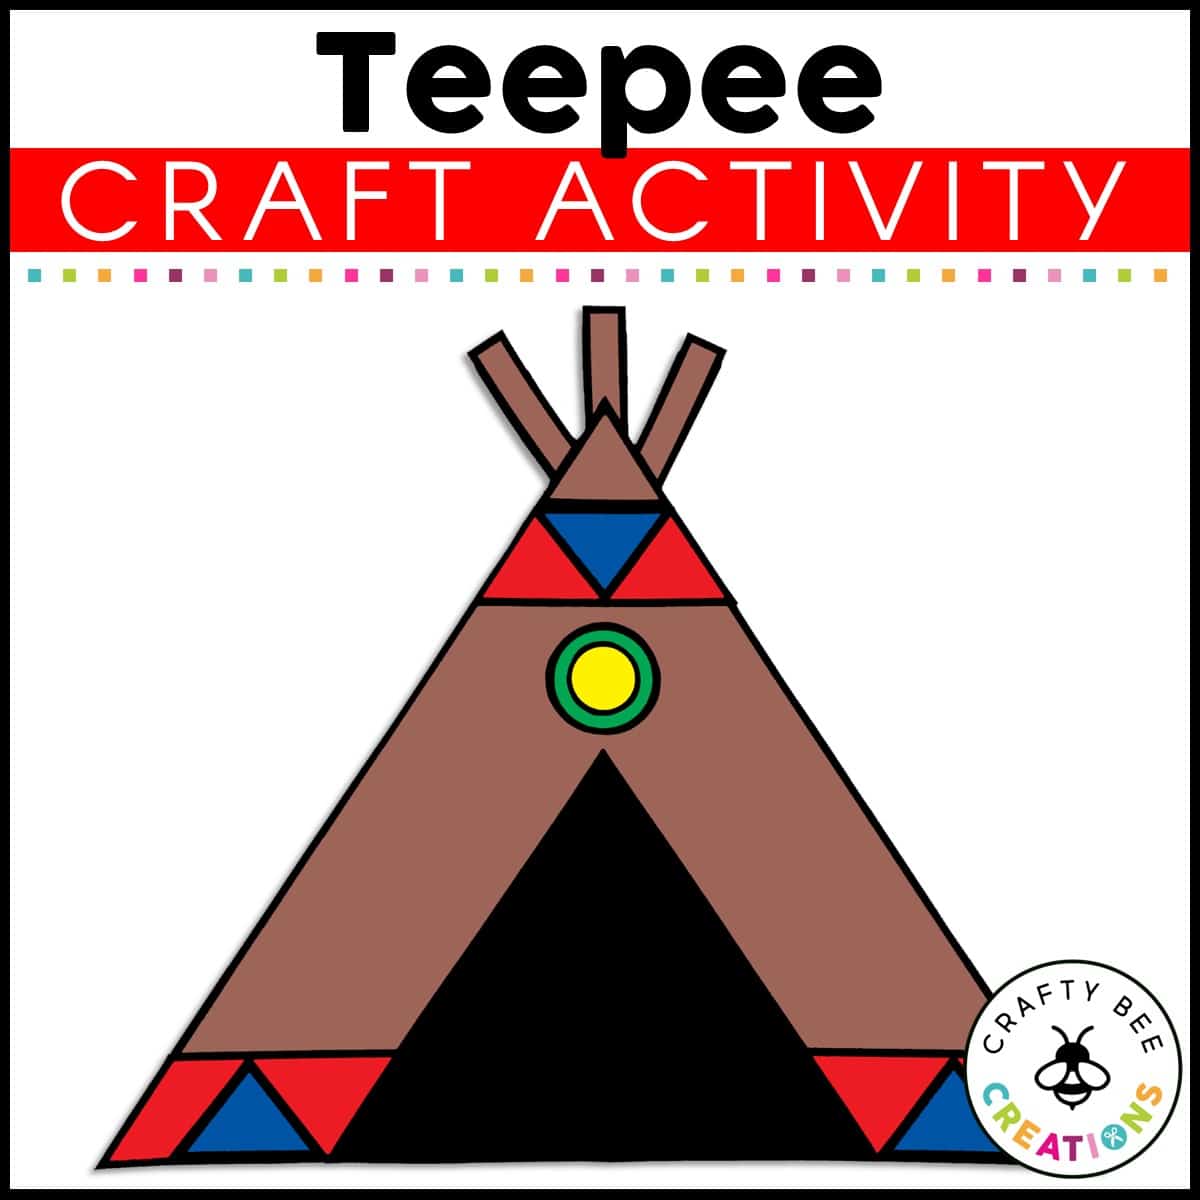 Teepee craft activity